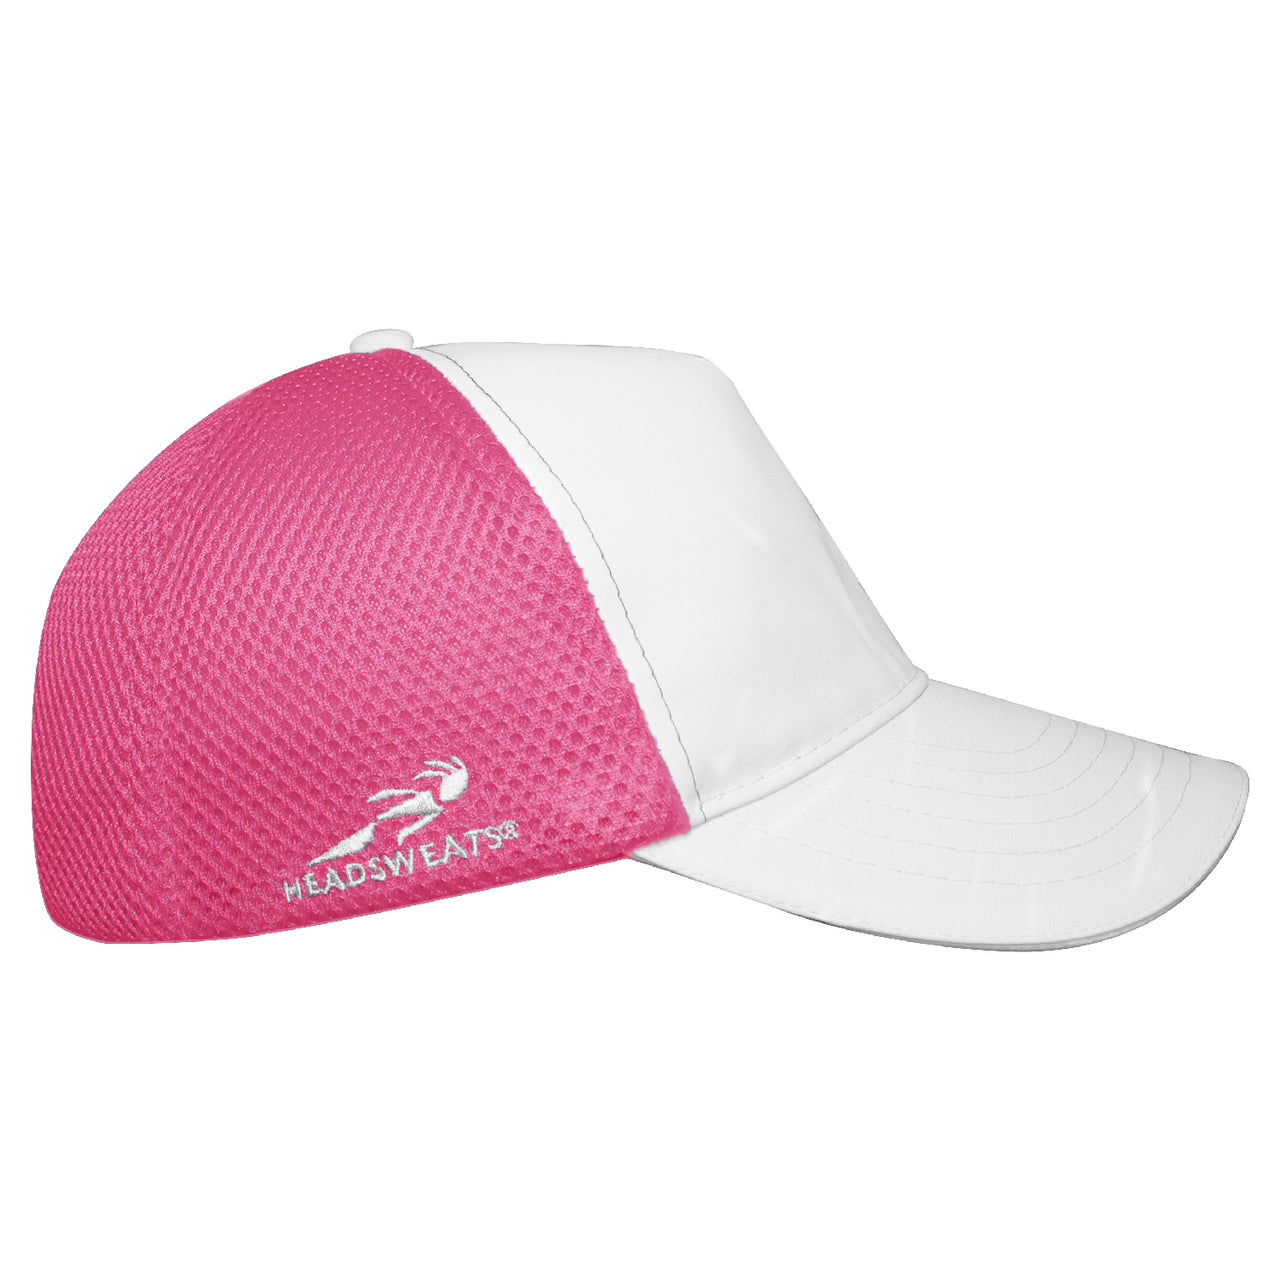 Merg Halloween Informeer White/Hot Pink Trucker Hat | Customizable Trucker Hat | Performance &  Lifestyle at Headsweats